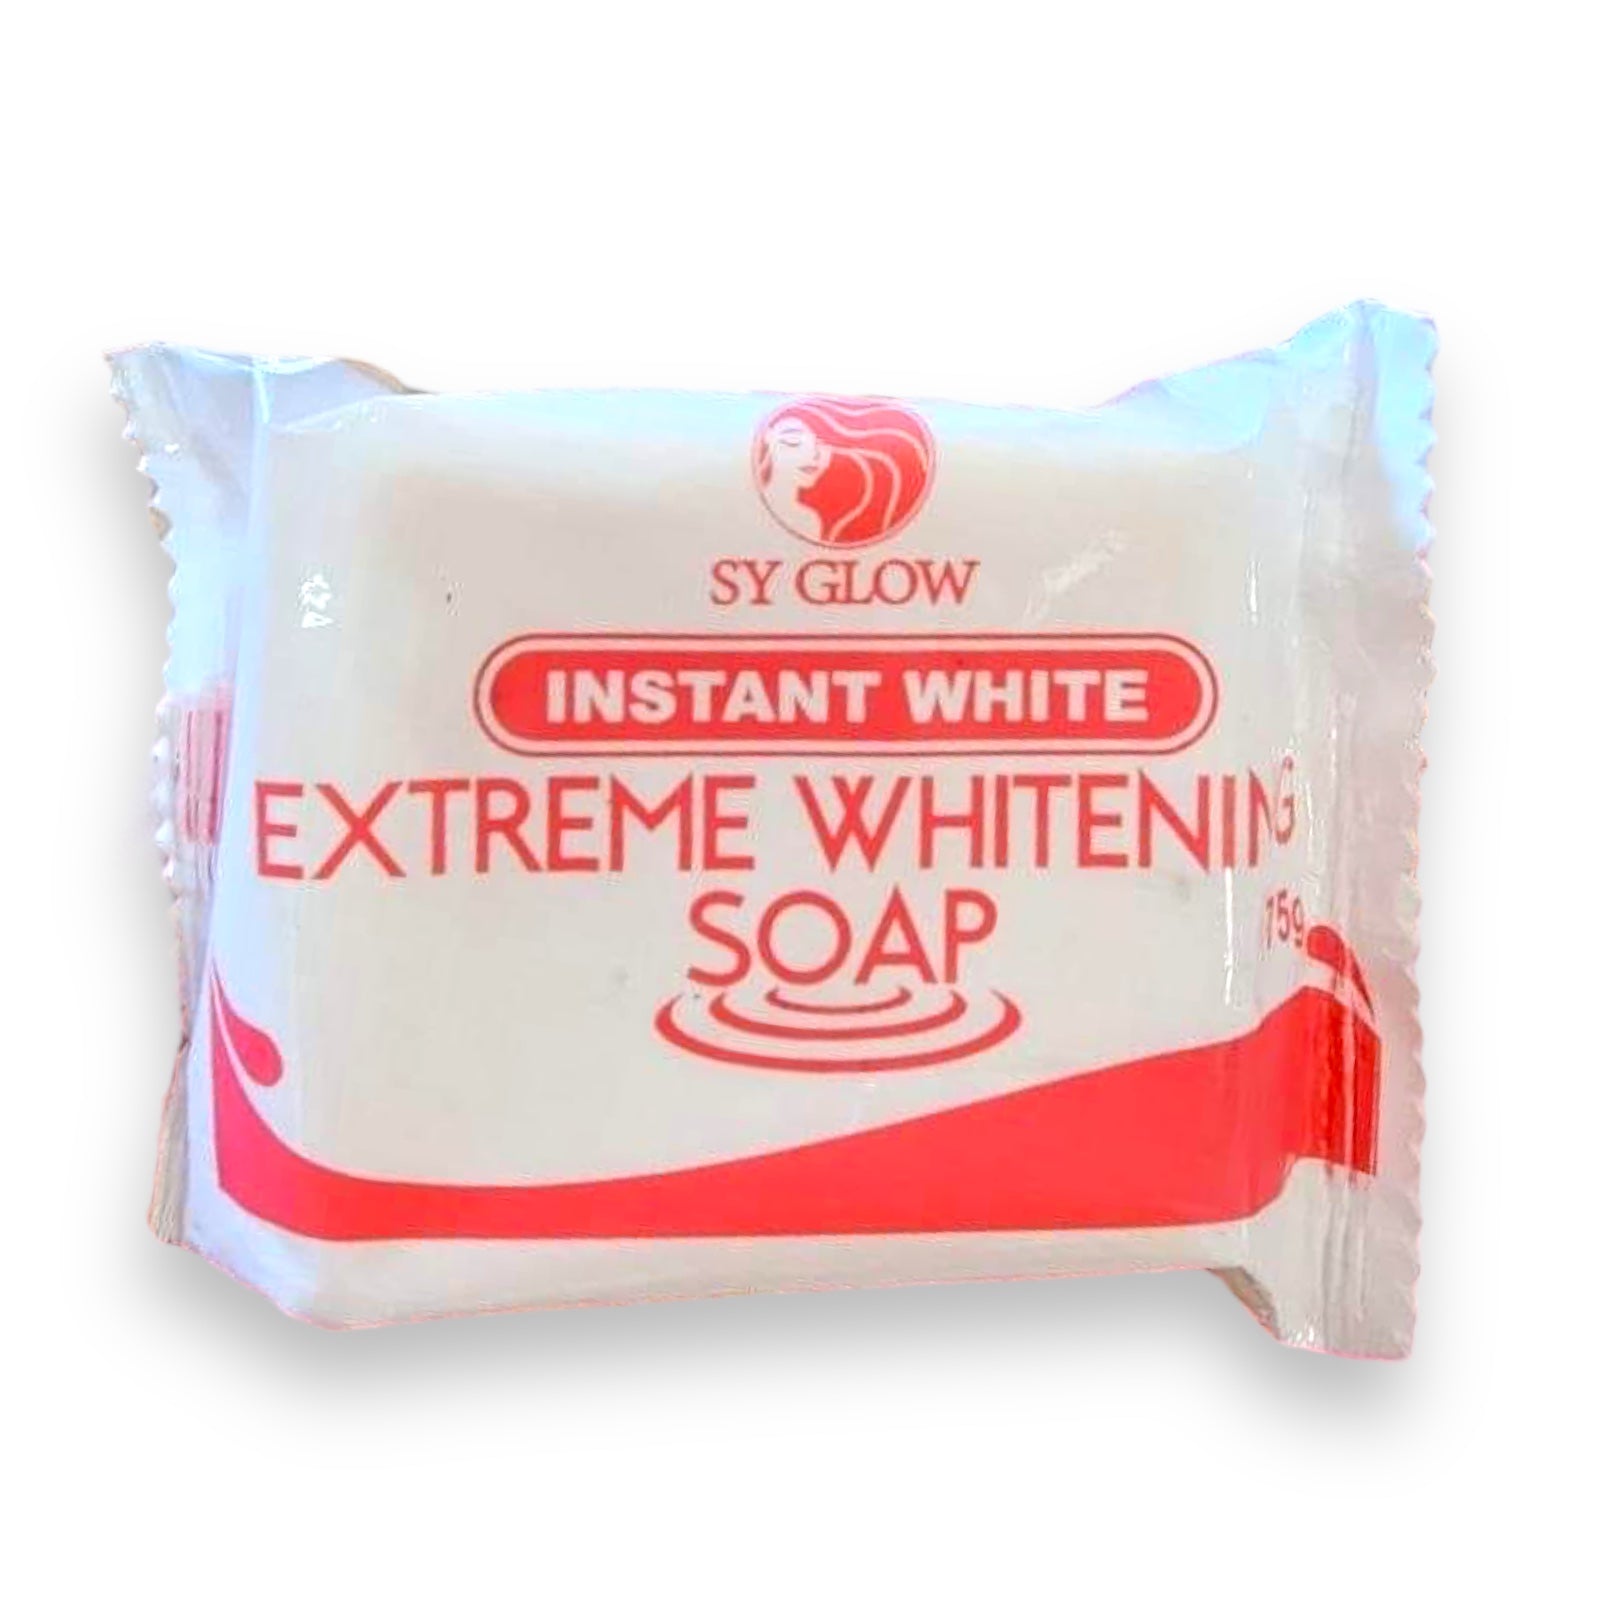 SY GLOW - Extreme Whitening Soap 75g